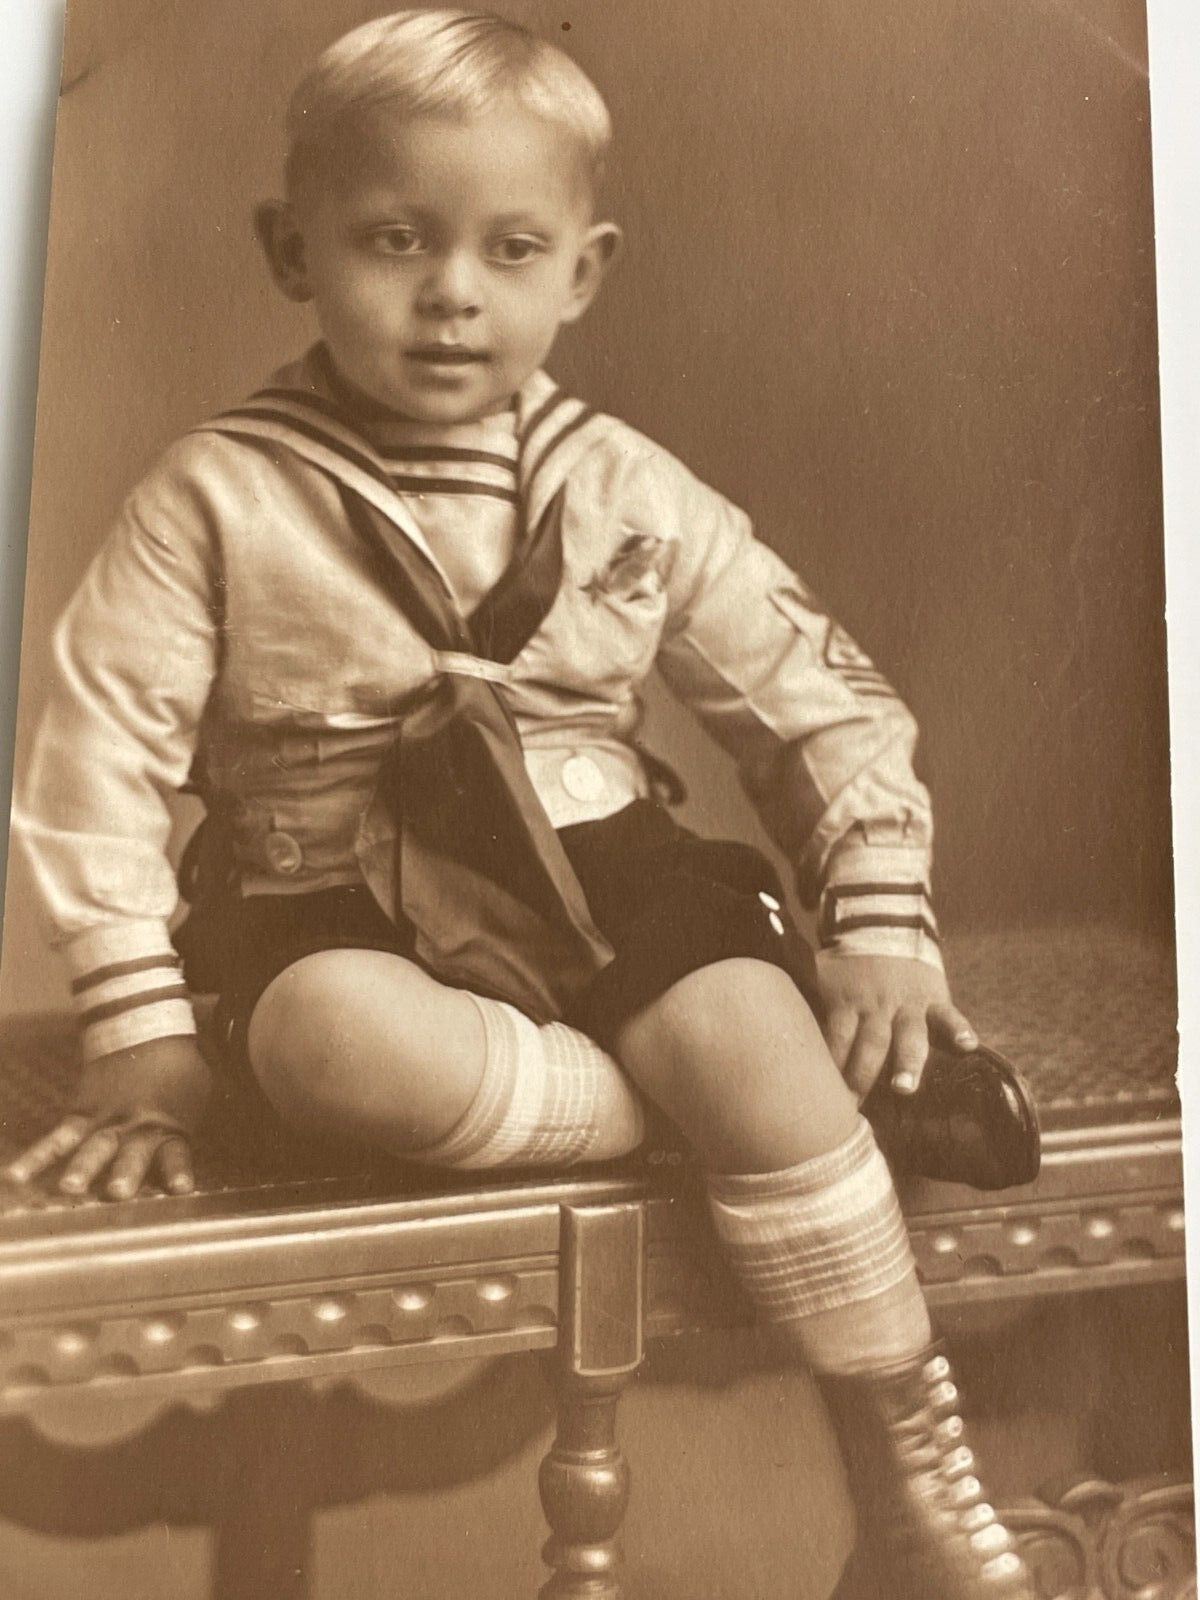 K4 Photograph Boy Sailor Boy 1910-20